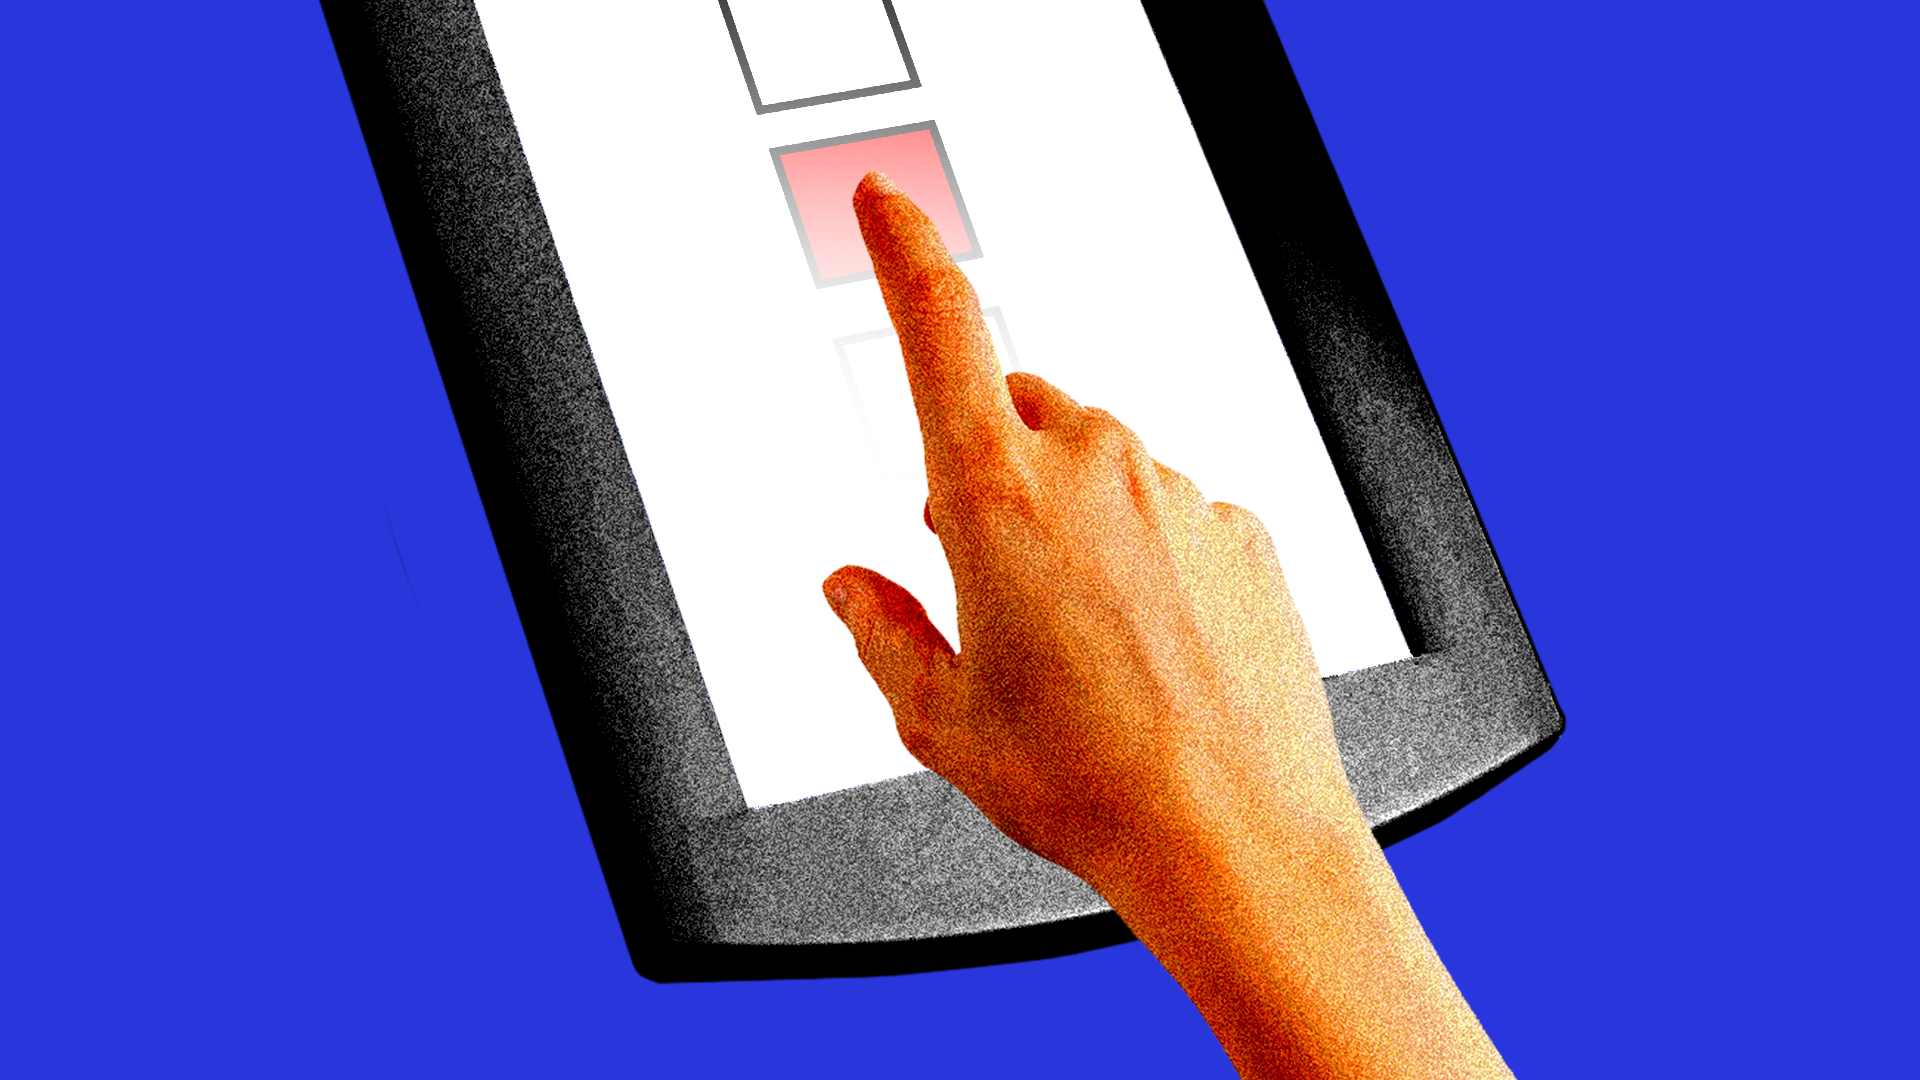 A hand touching an electronic voting touchscreen